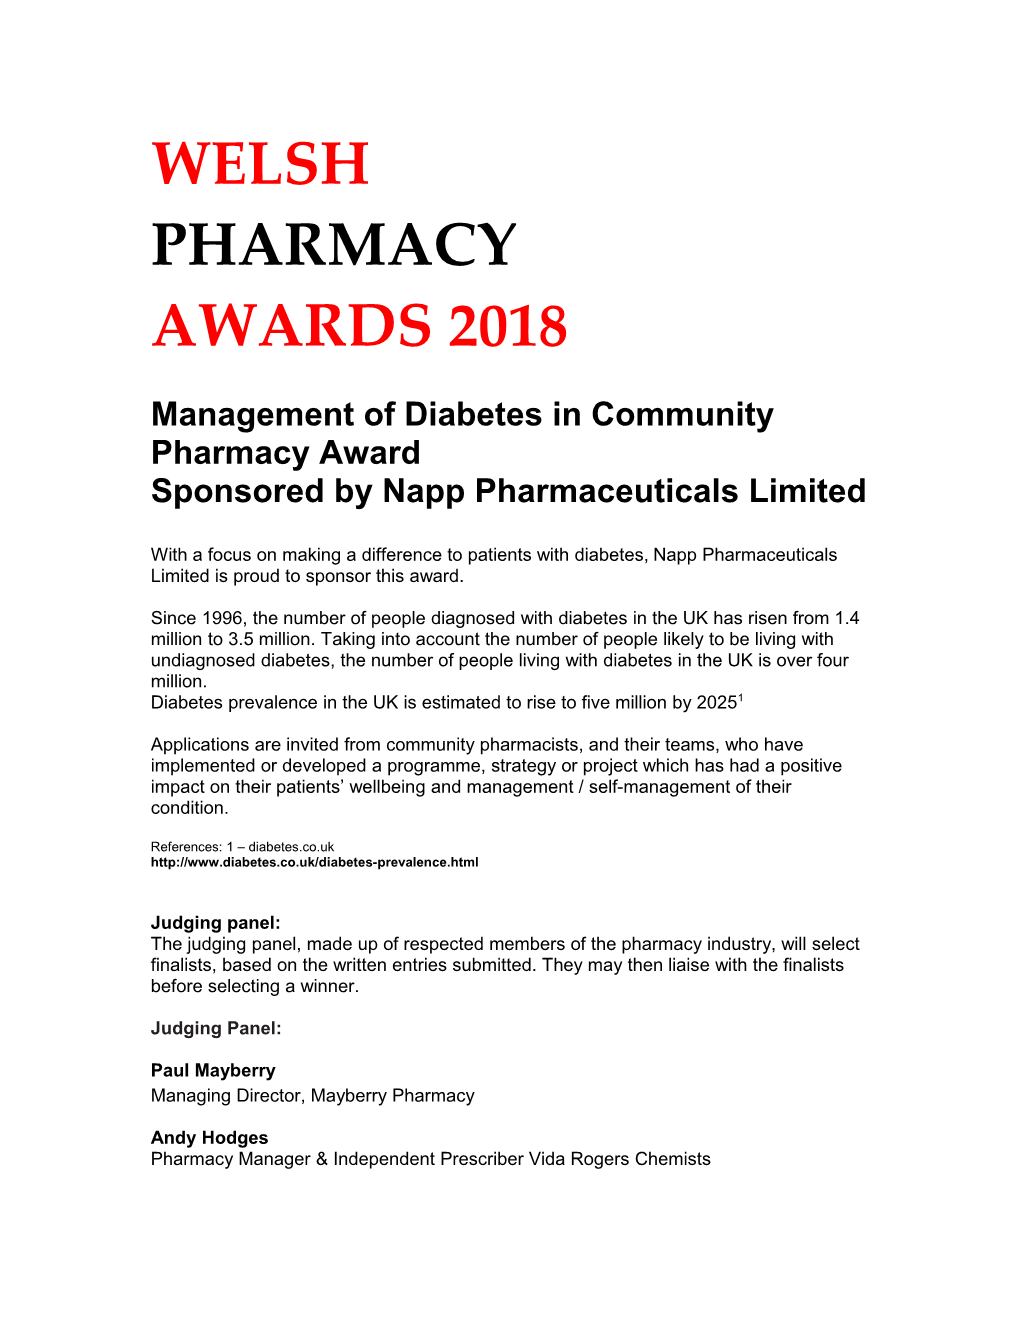 Management of Diabetes in Community Pharmacy Award